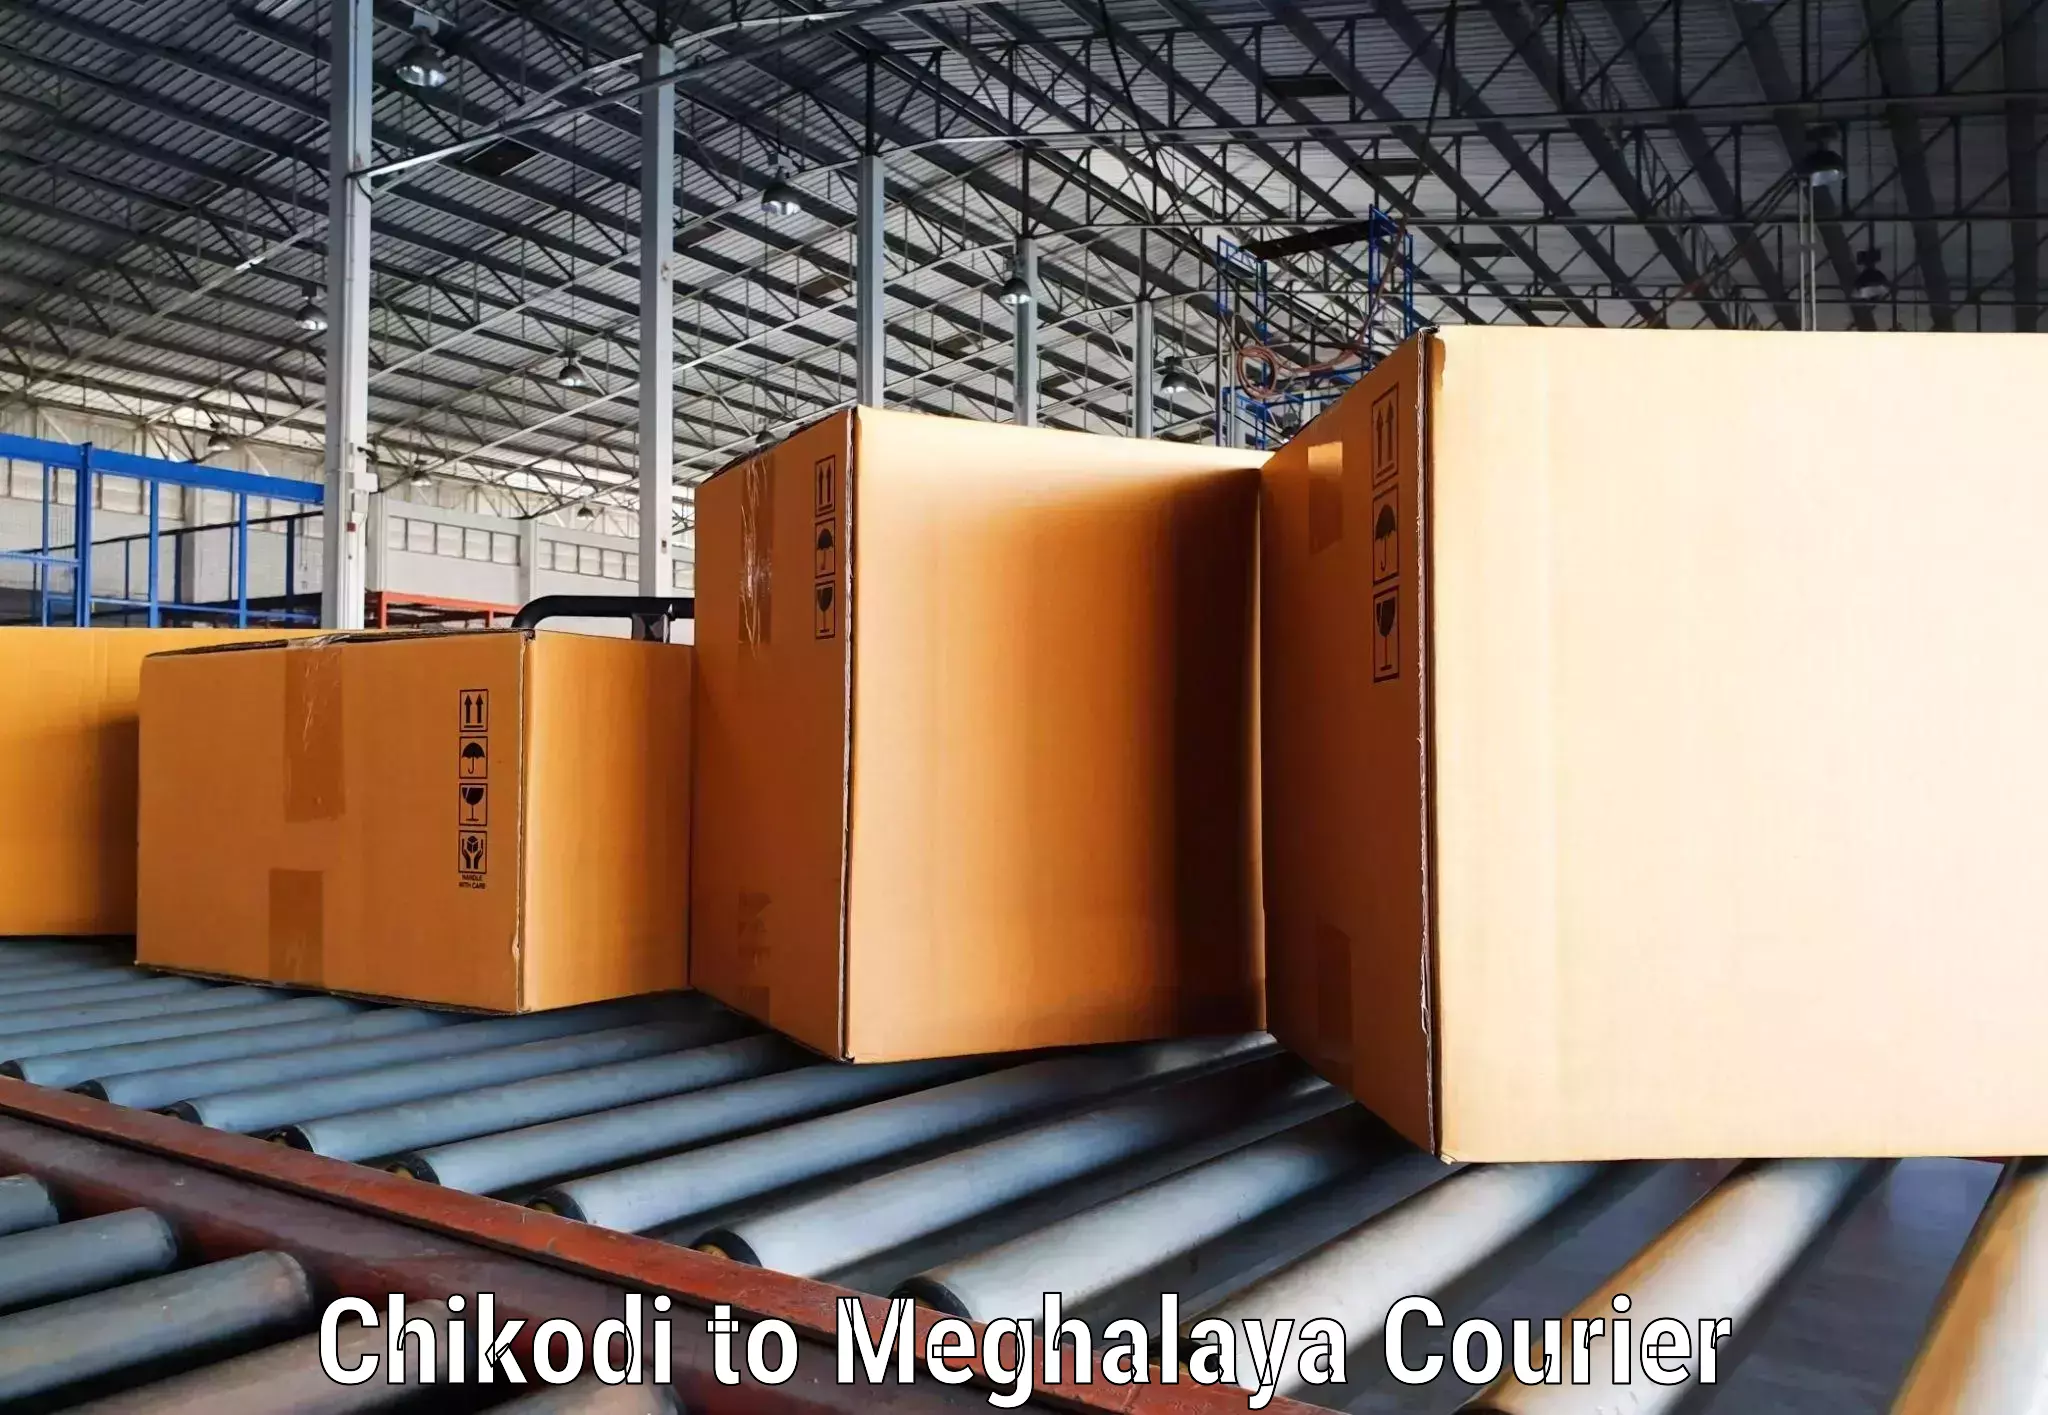 Courier service partnerships Chikodi to Meghalaya